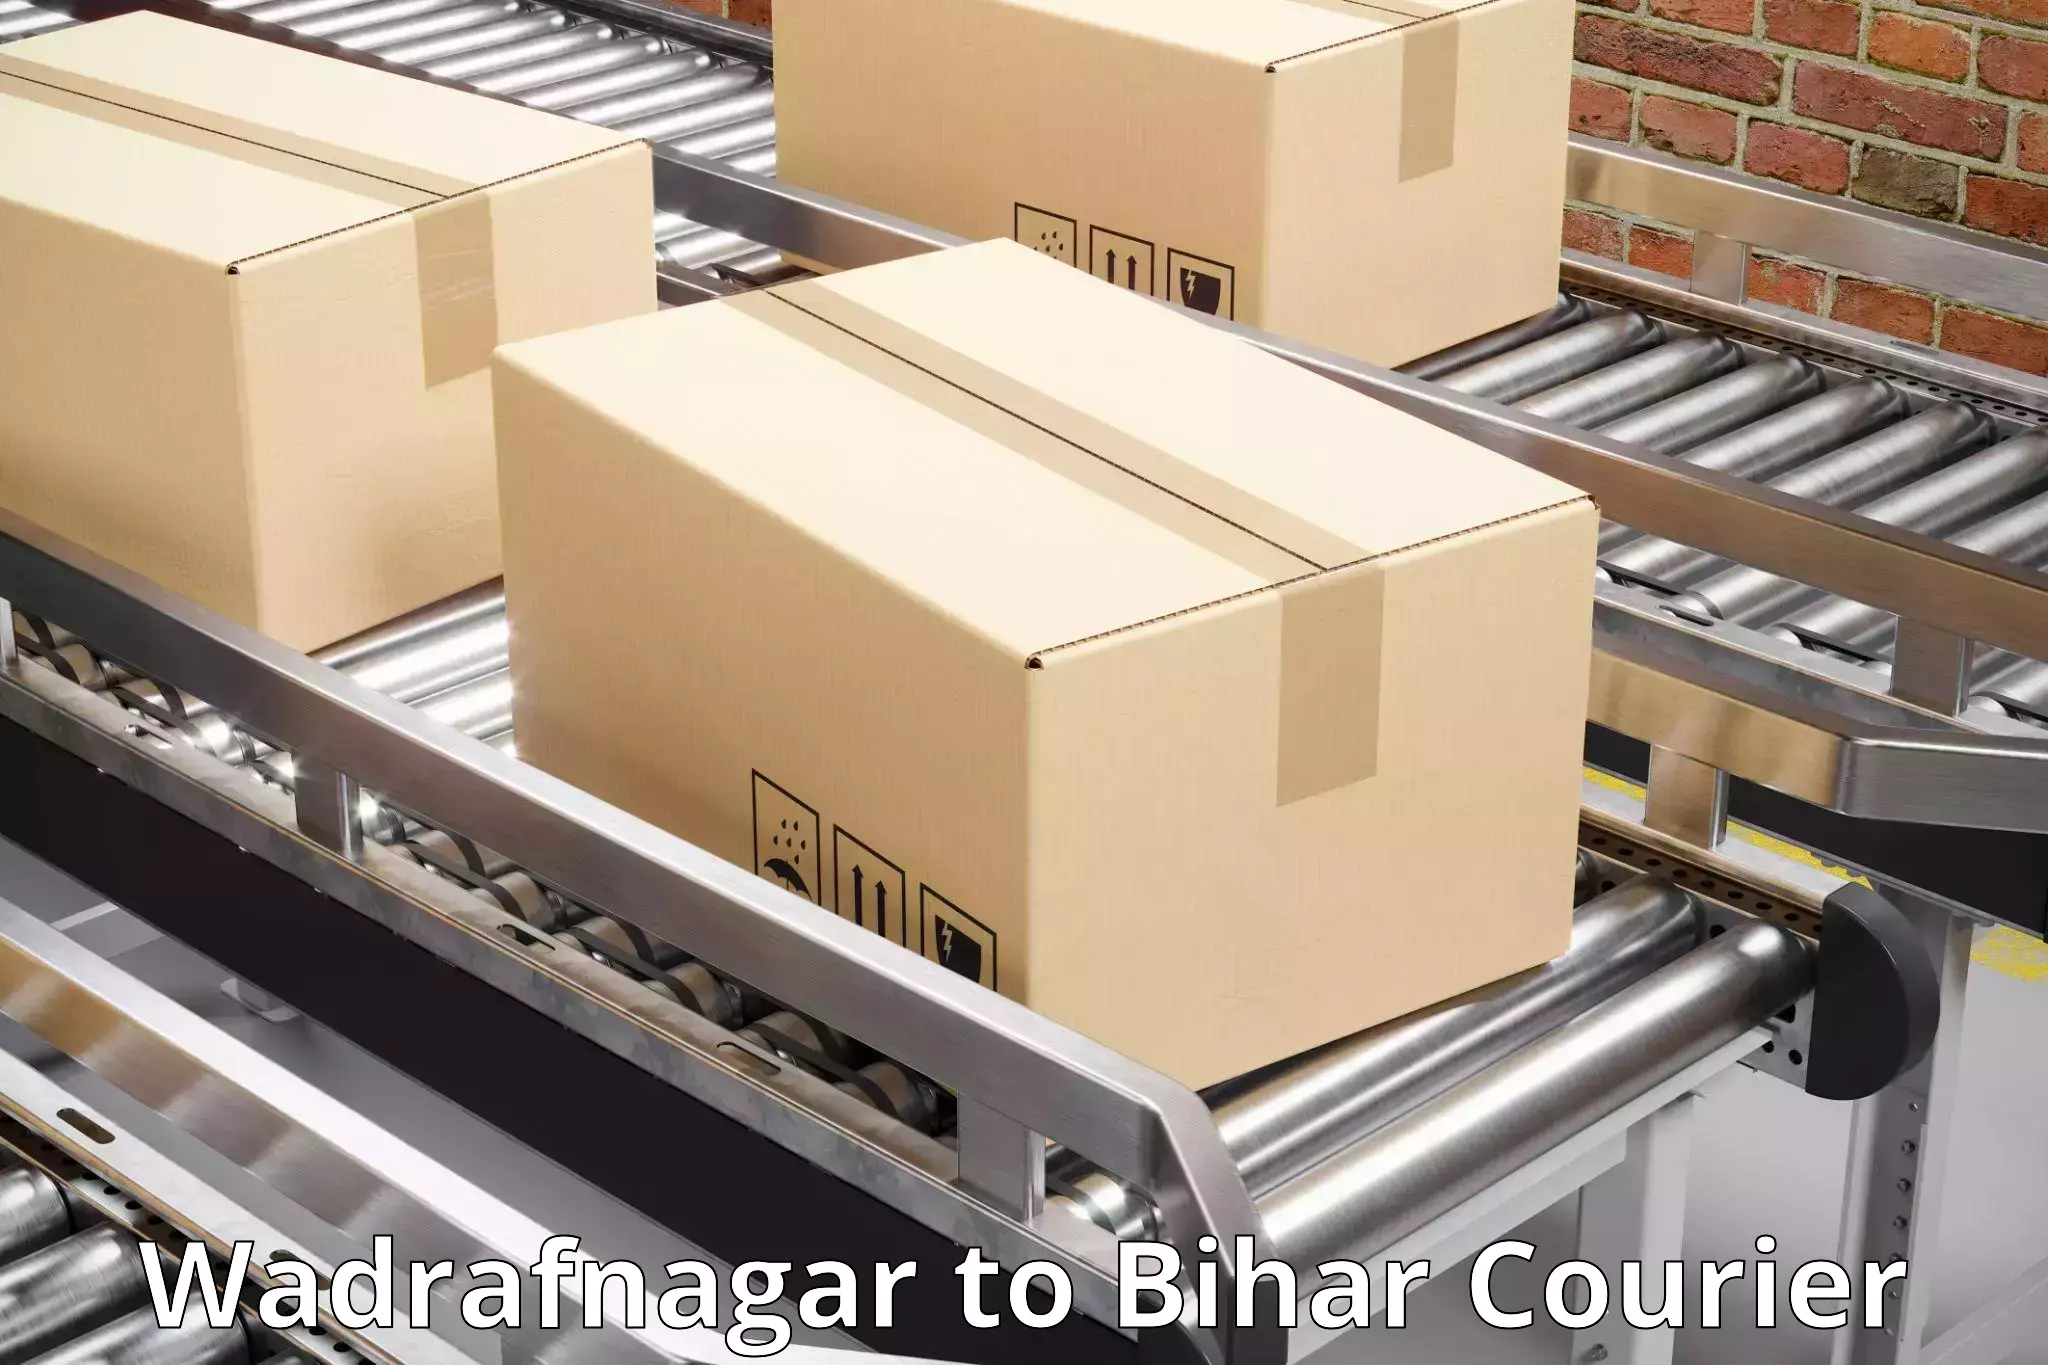 User-friendly delivery service Wadrafnagar to Piro